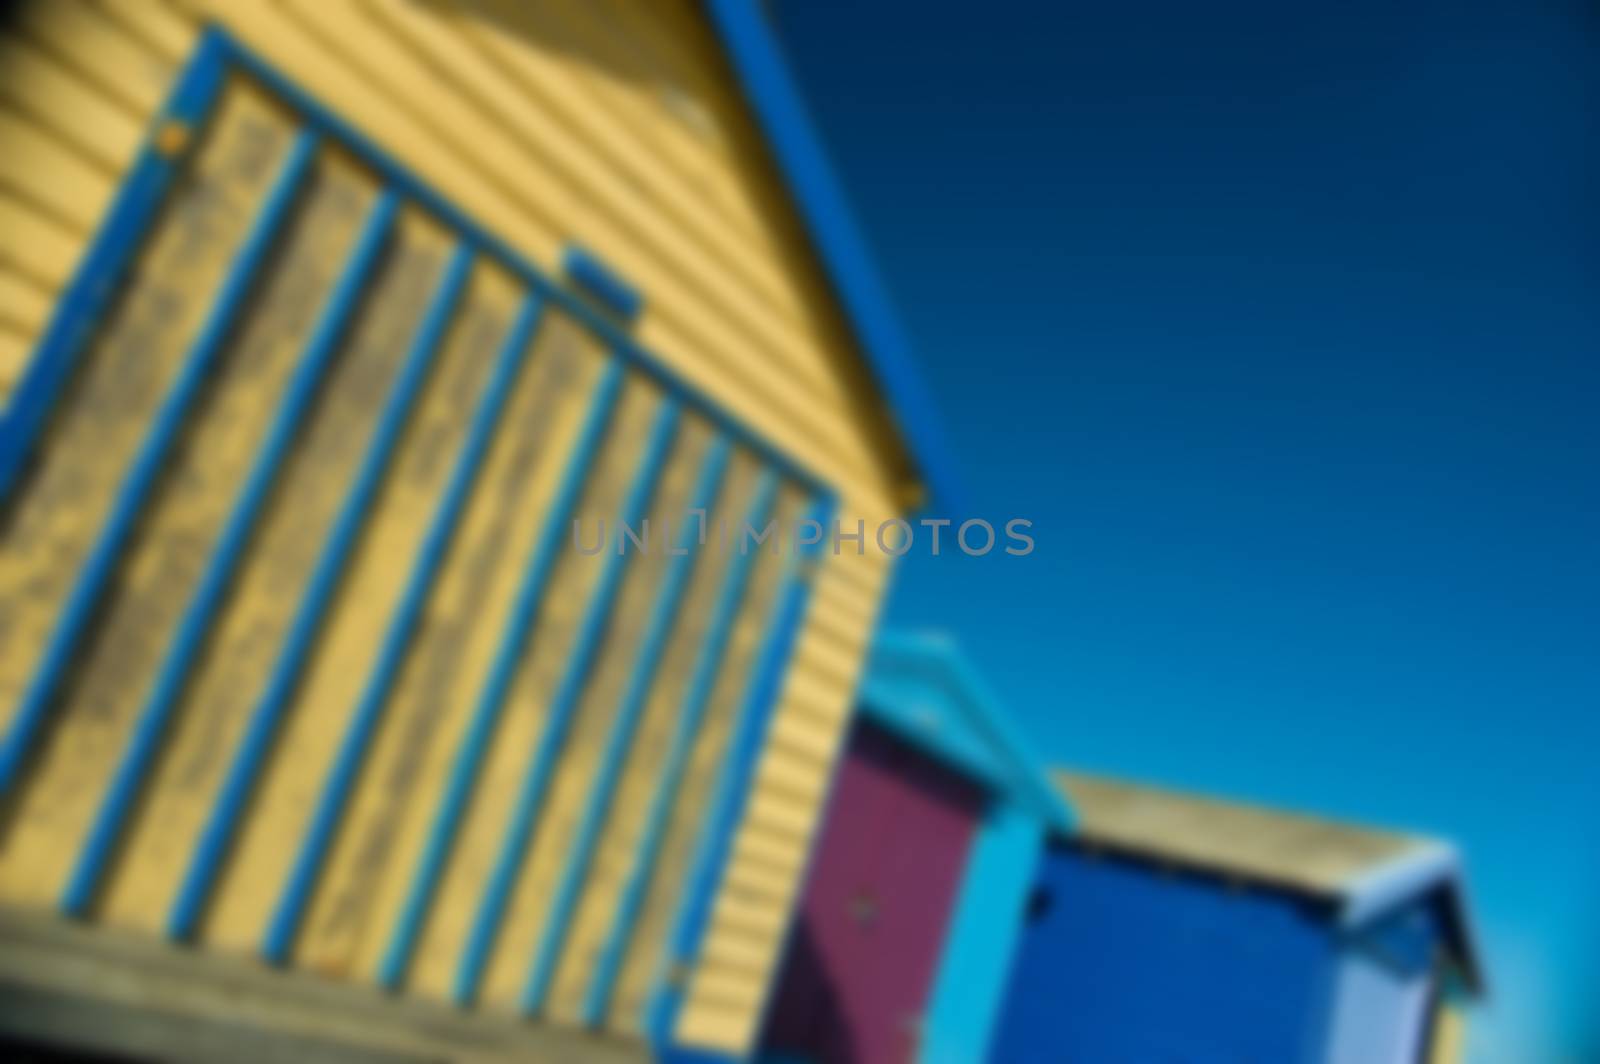 An Artistic Blurred Photo of Rustic Beach Huts (Melbourne)